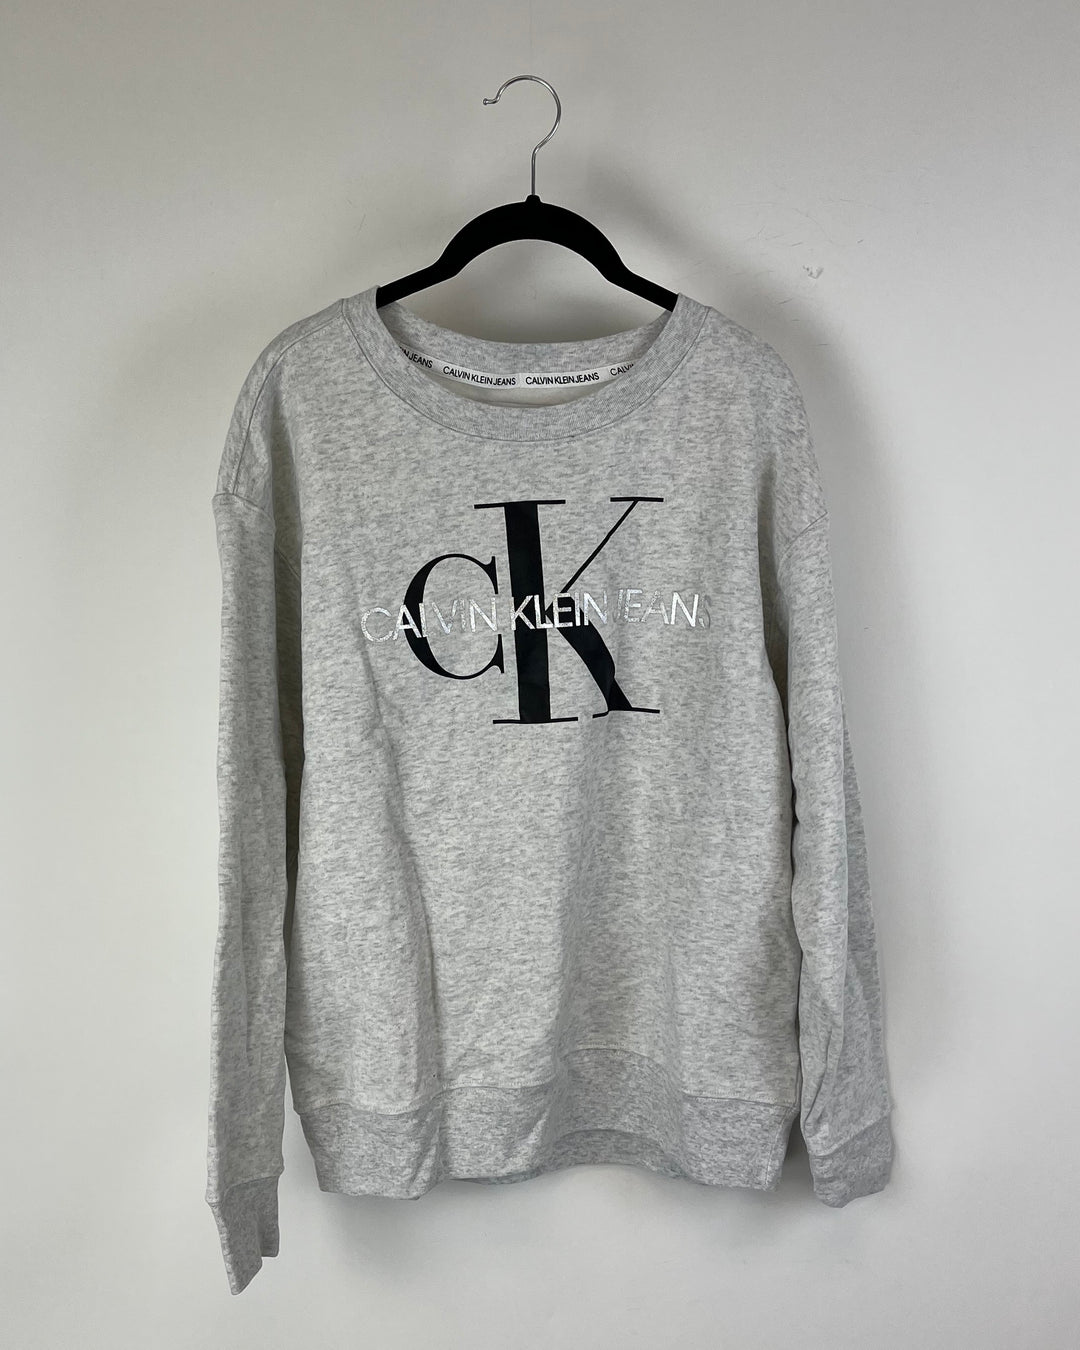 Grey Crewneck Sweatshirt - Small